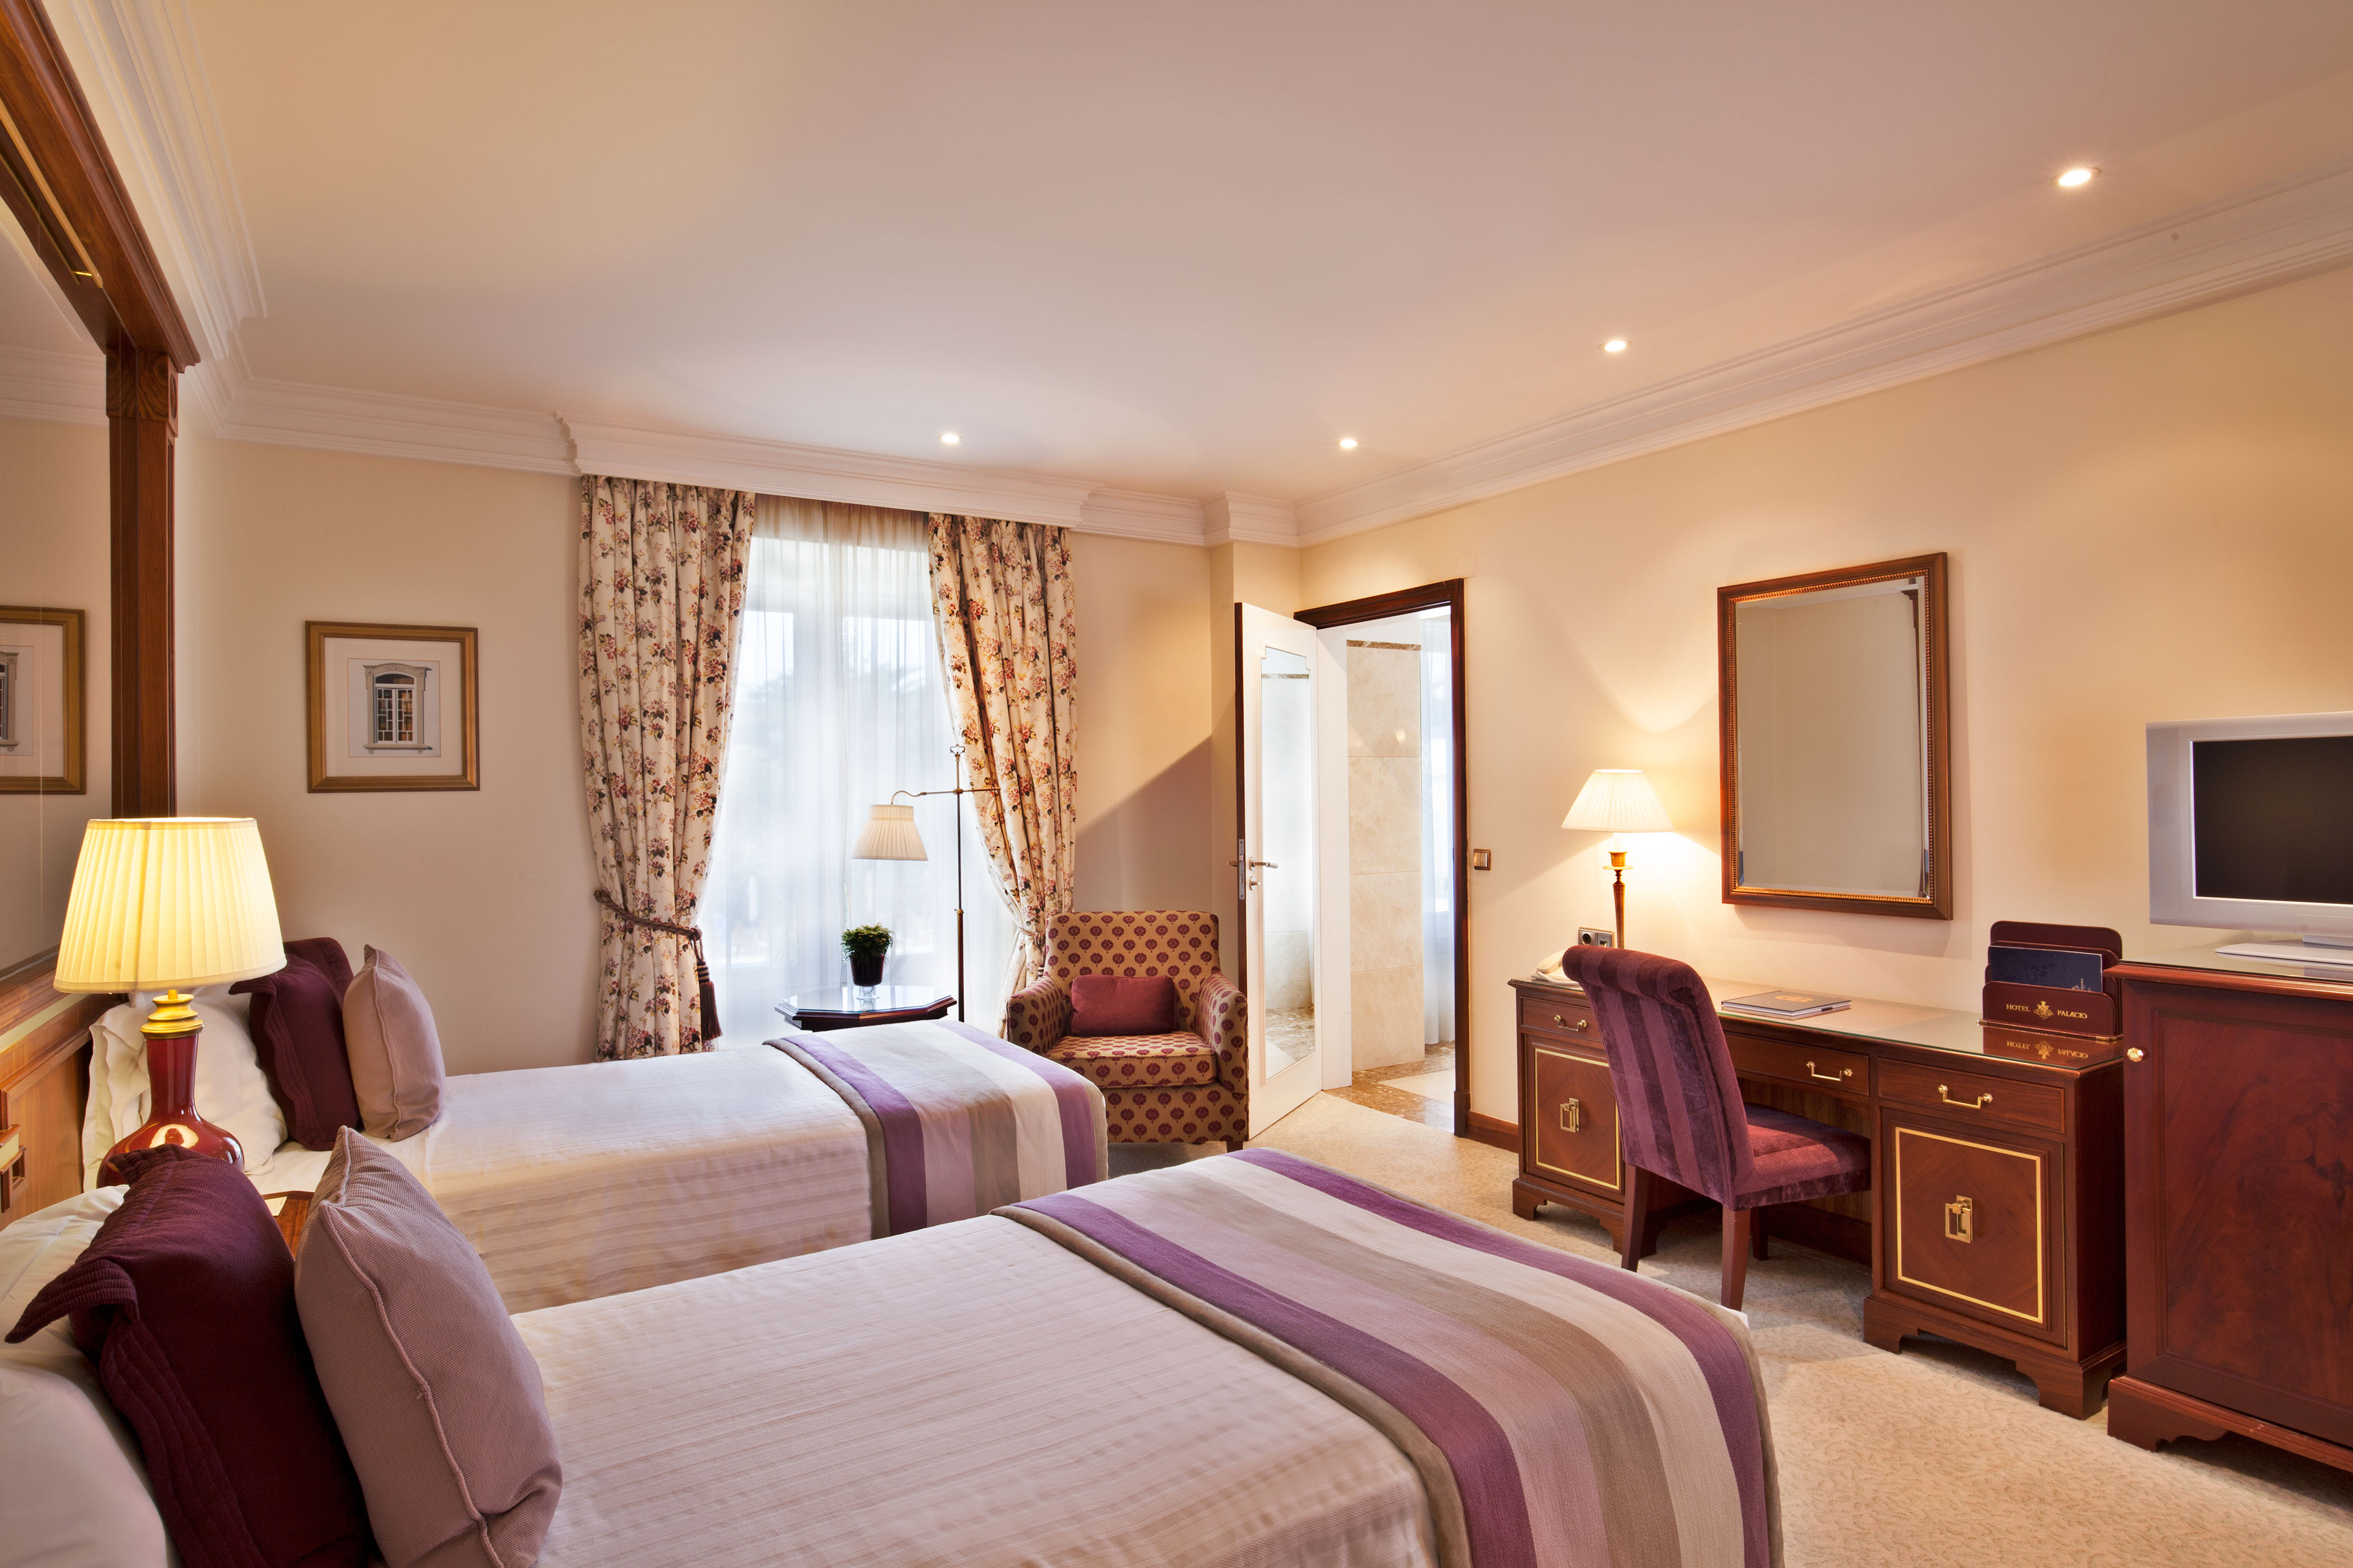 Golf-expedition-golfreizen-golfresort-Palacio-Estoril-Hotel-Golf-And-Spa-appartement-bedroom-5